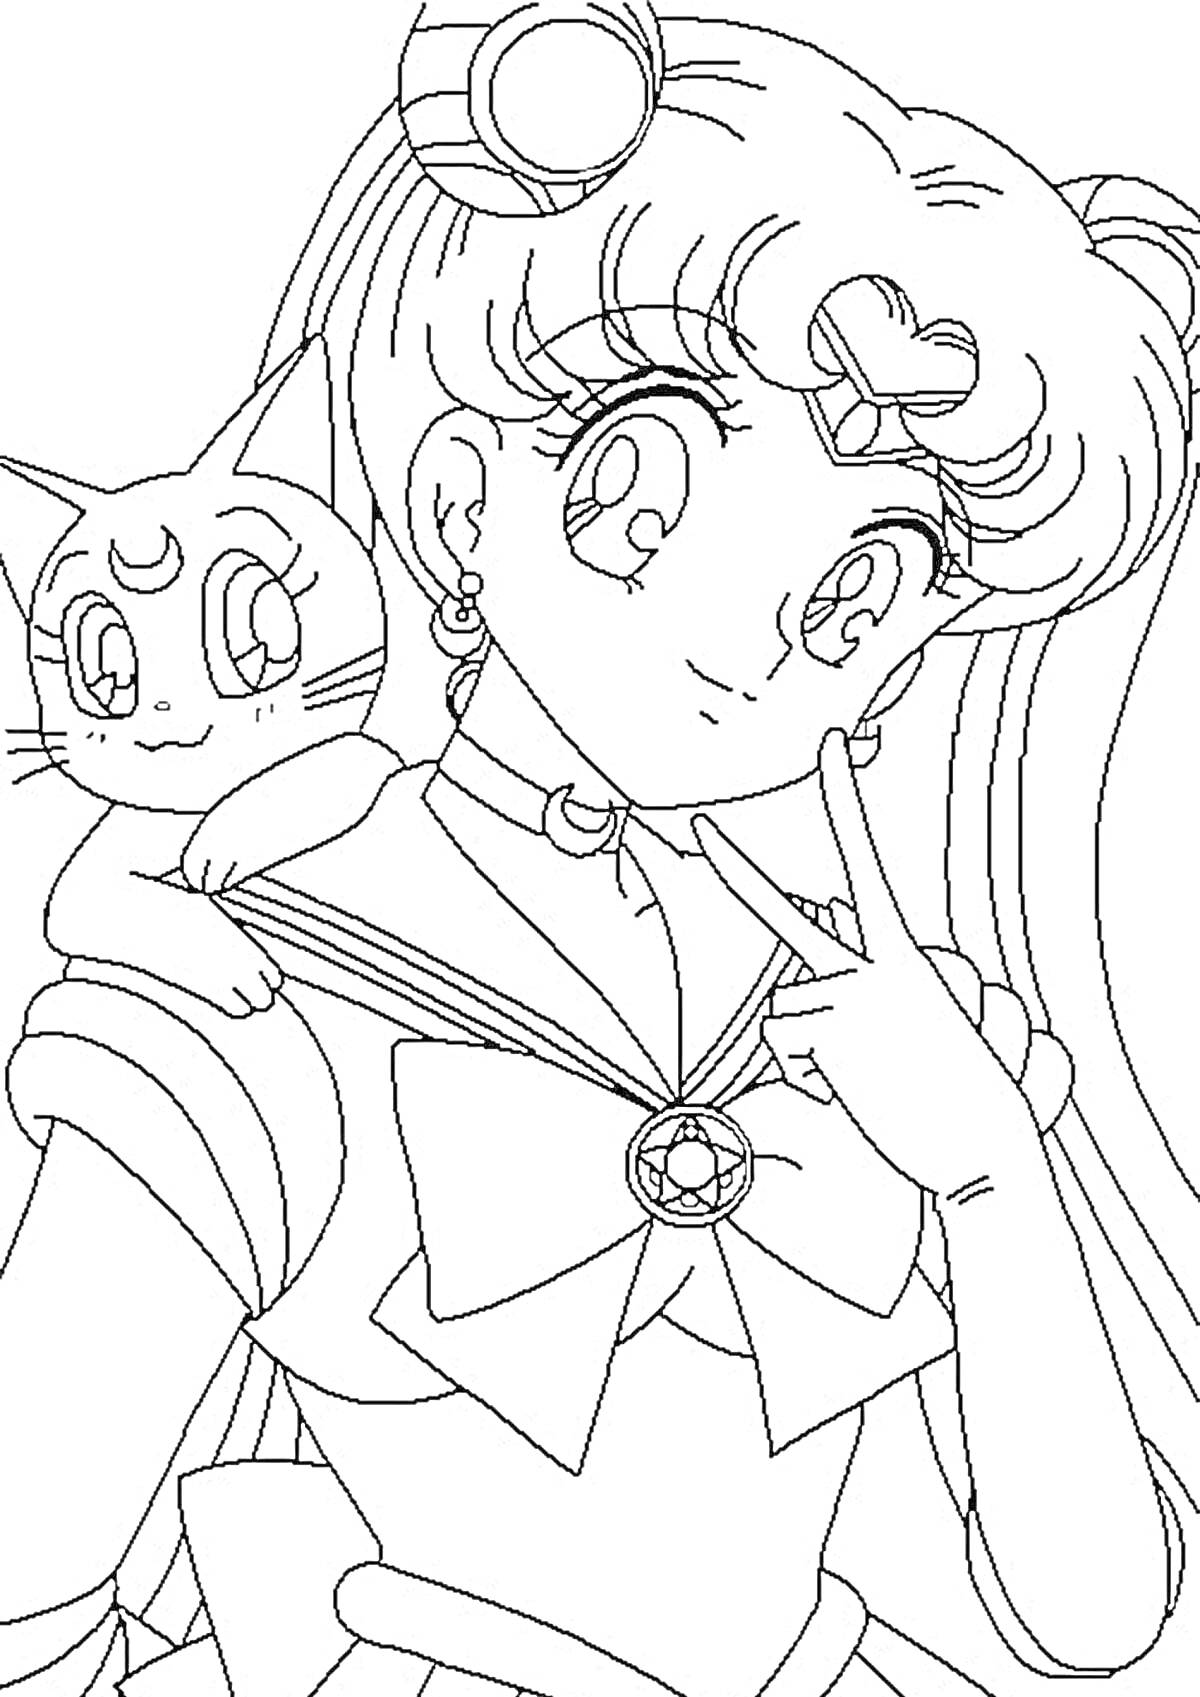 Раскраска Девушка в костюме сейлора с длинными волосами и кошка на плече